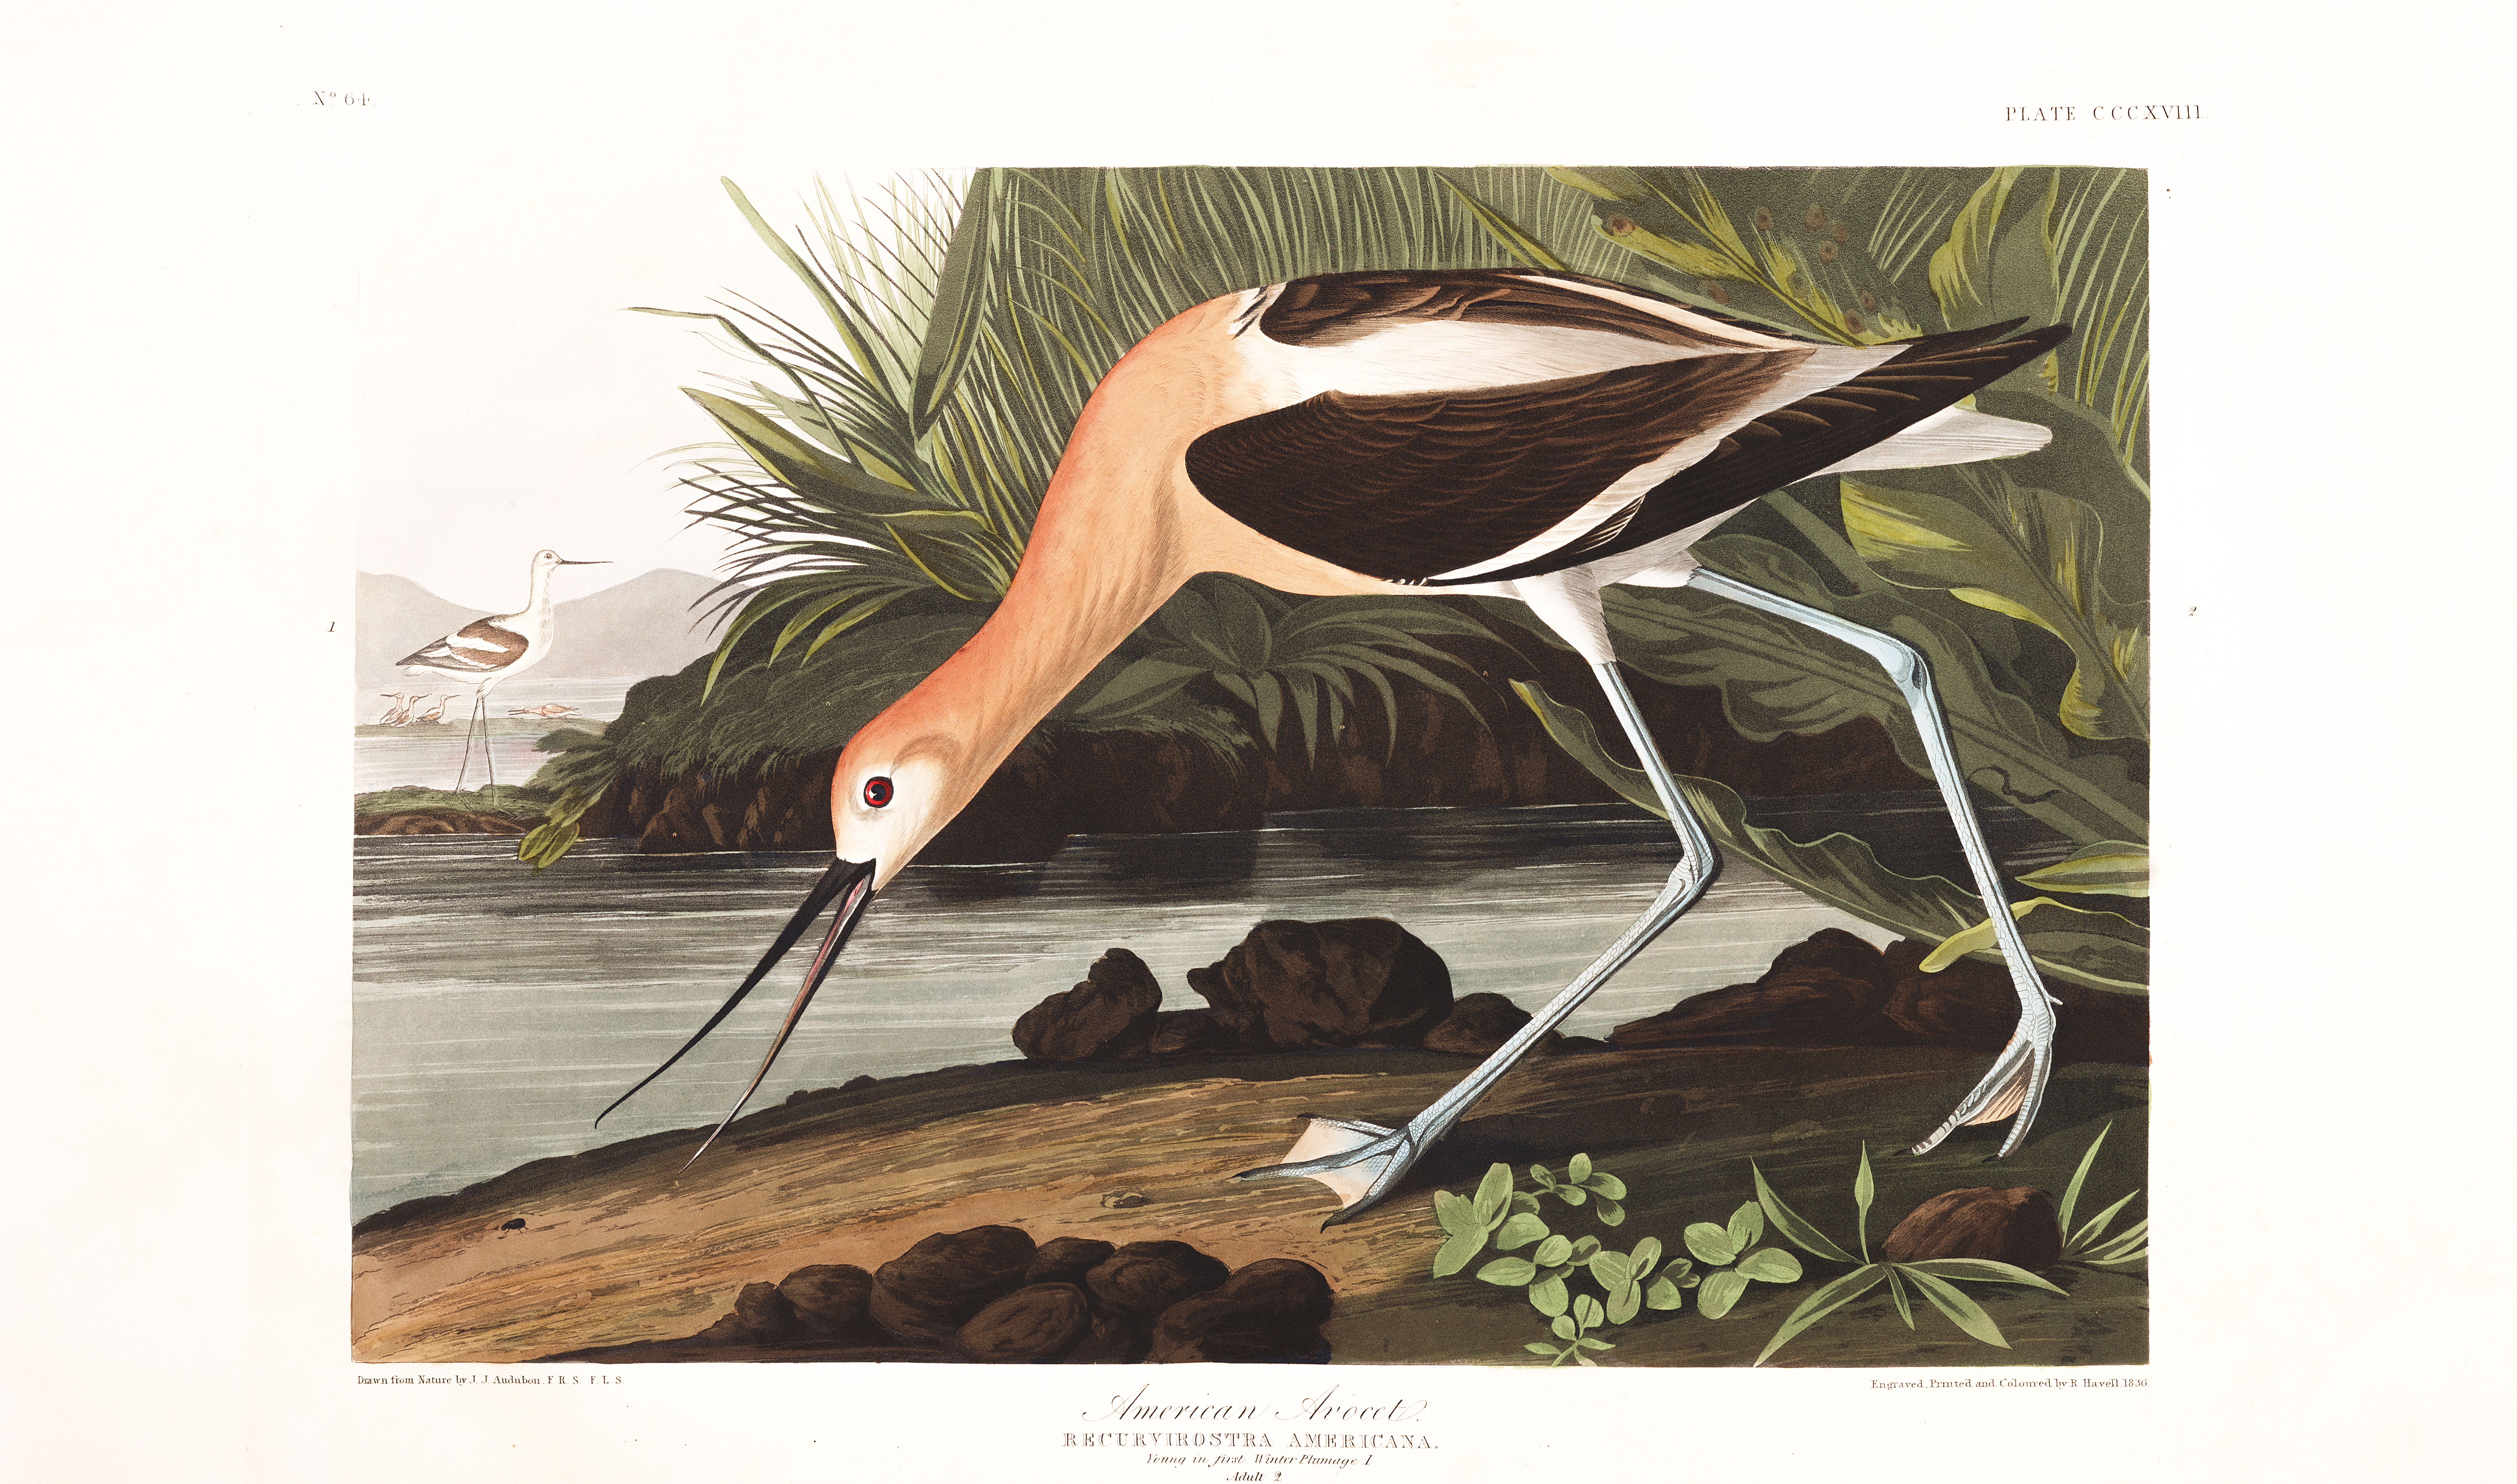 Jean Audubon's American Avocet